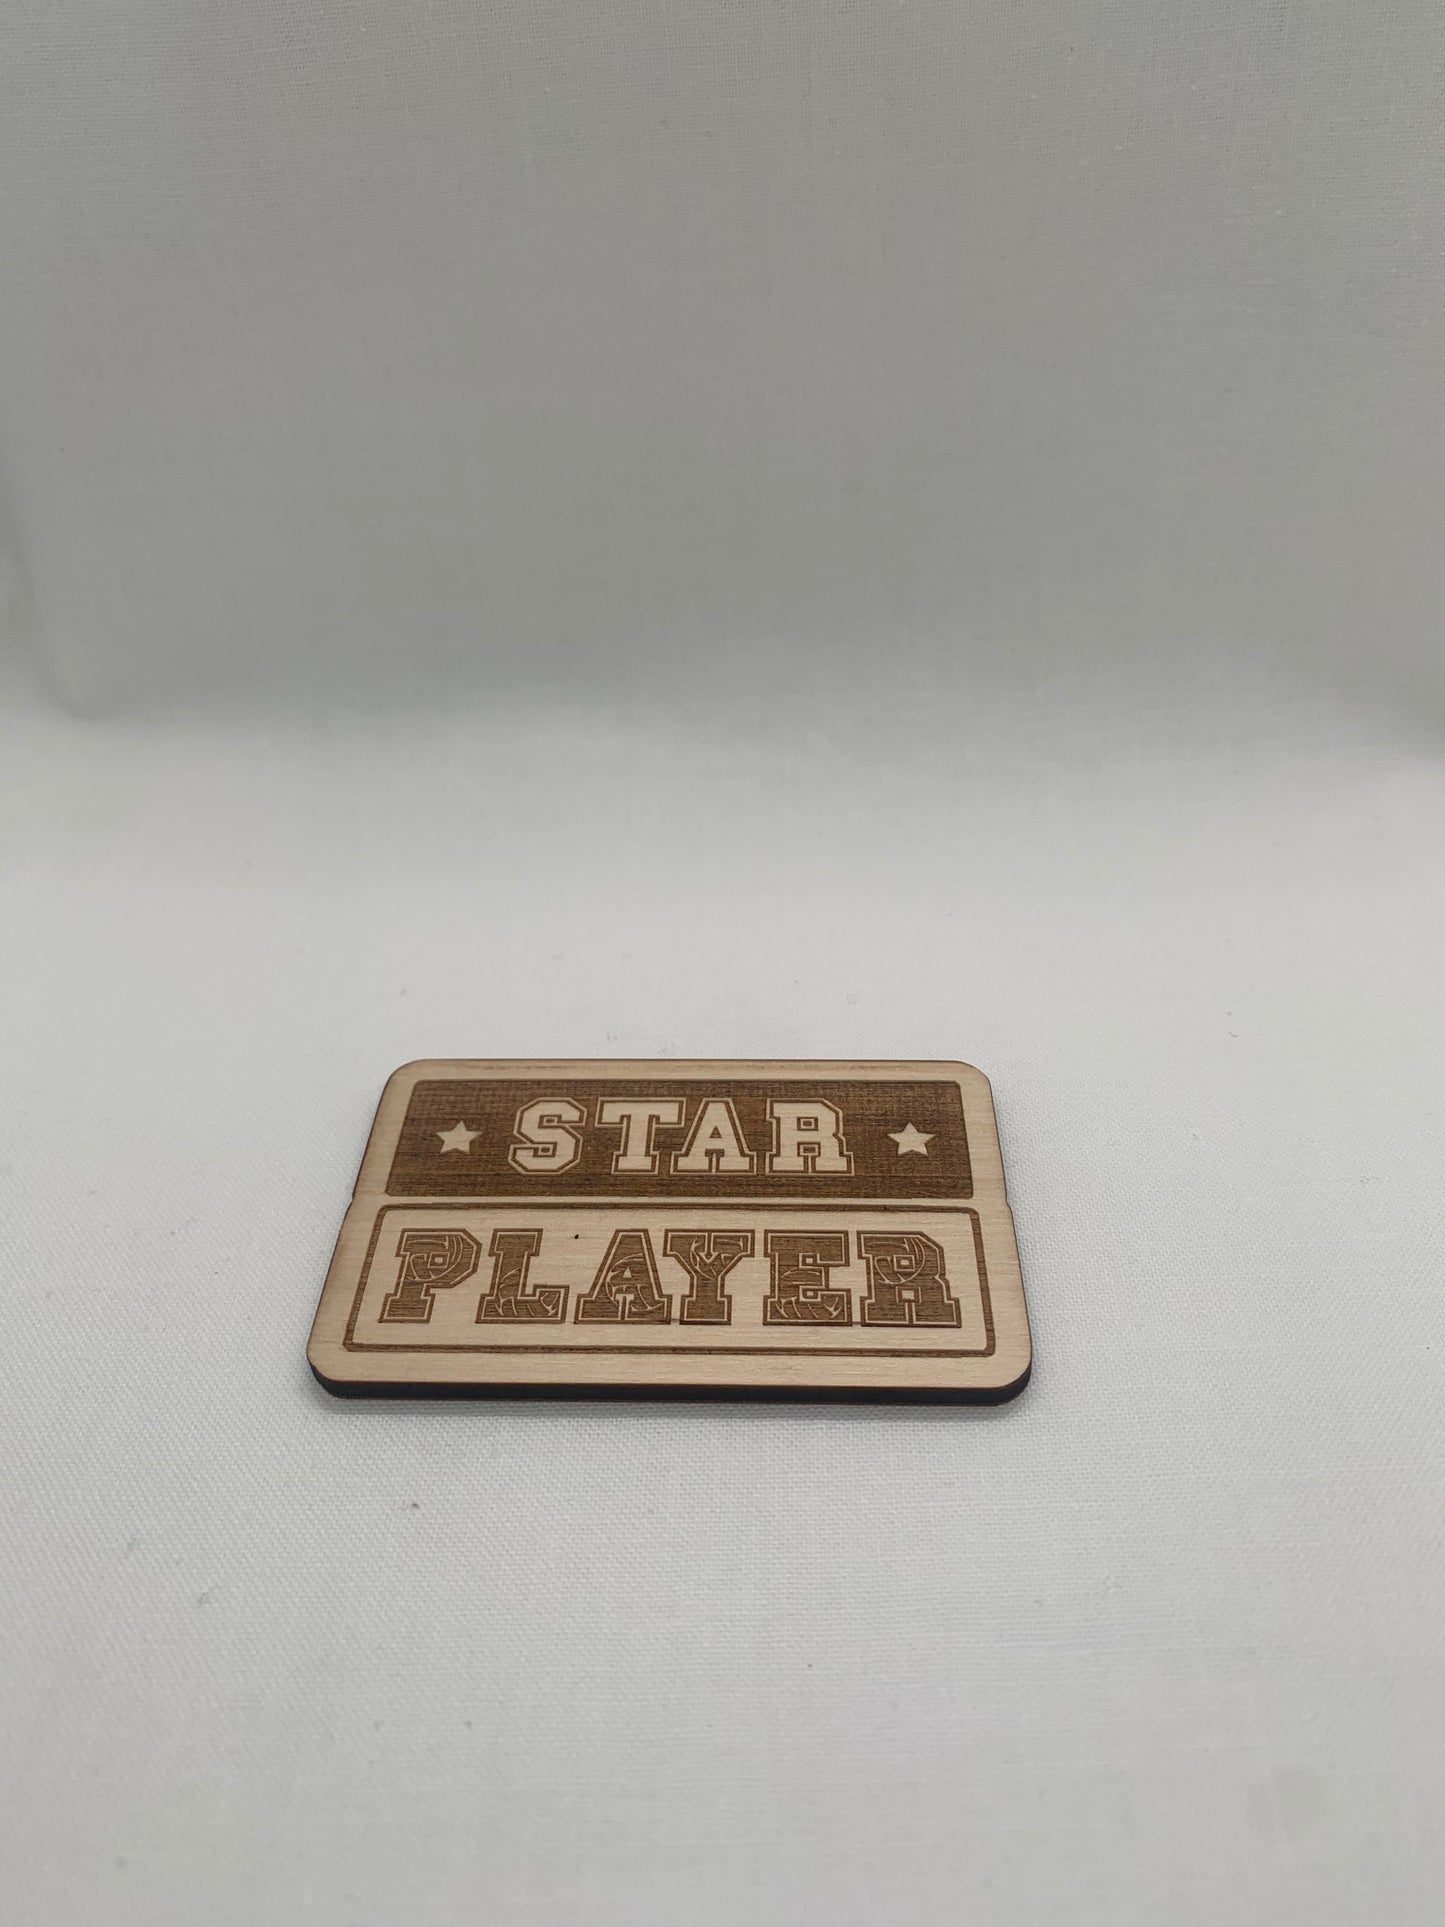 Star player - Creative Designs By Kari